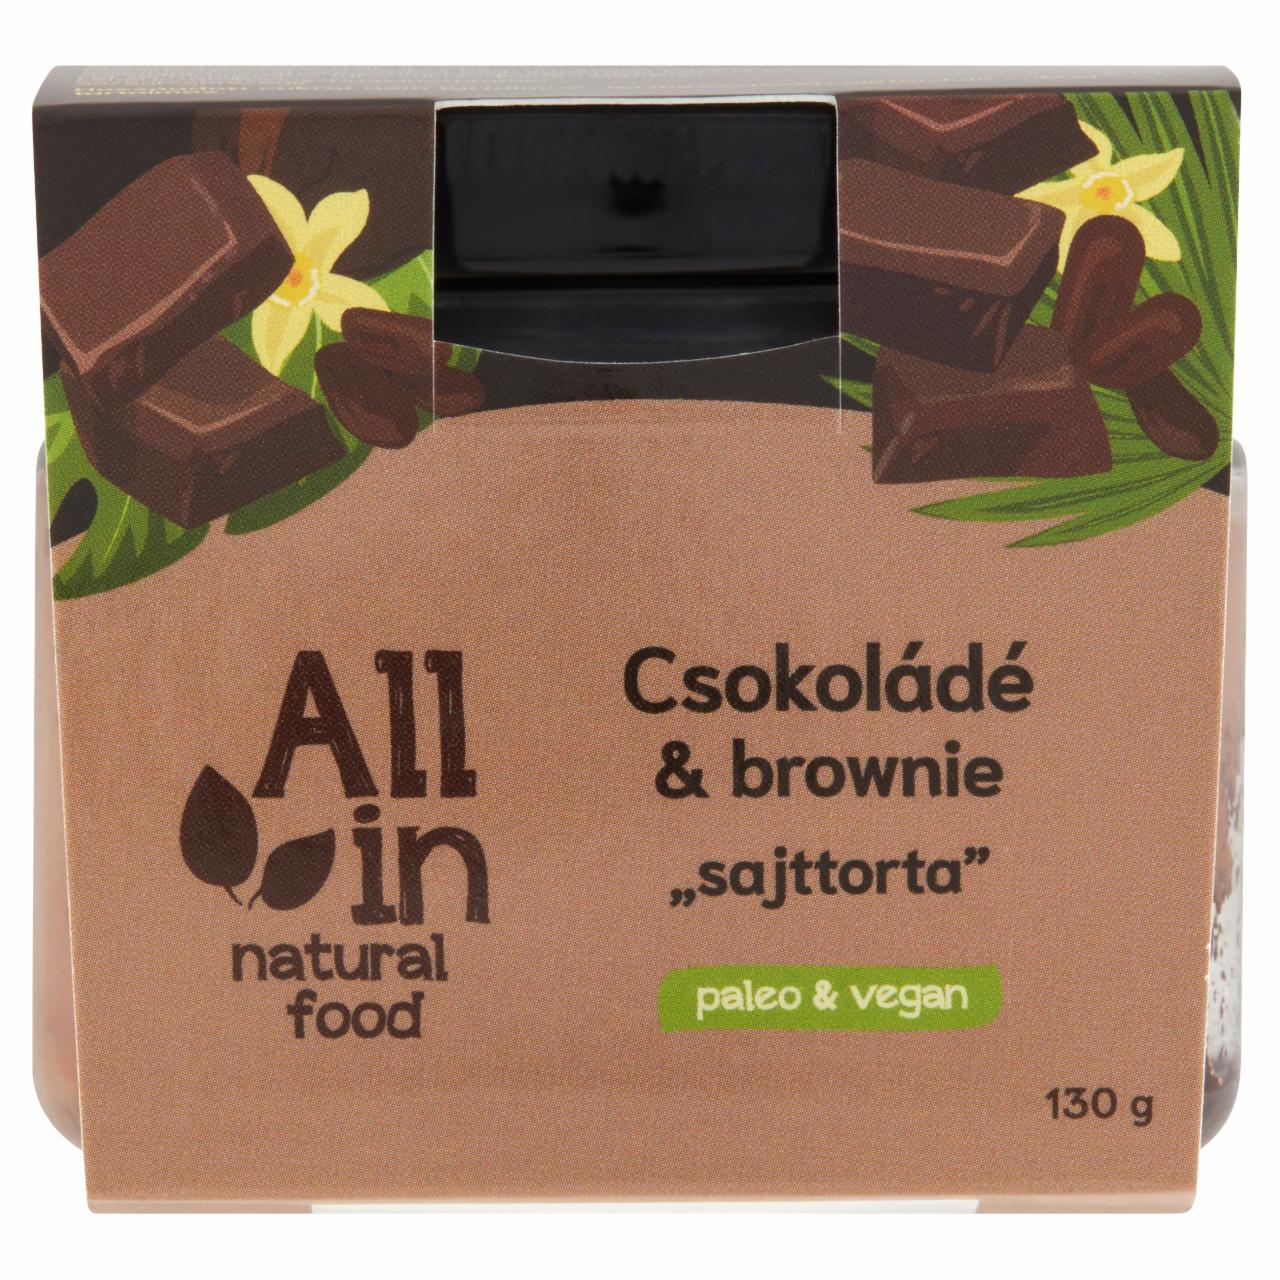 Képek - ALL IN natural food paleo & vegan csokoládé & brownie „sajttorta